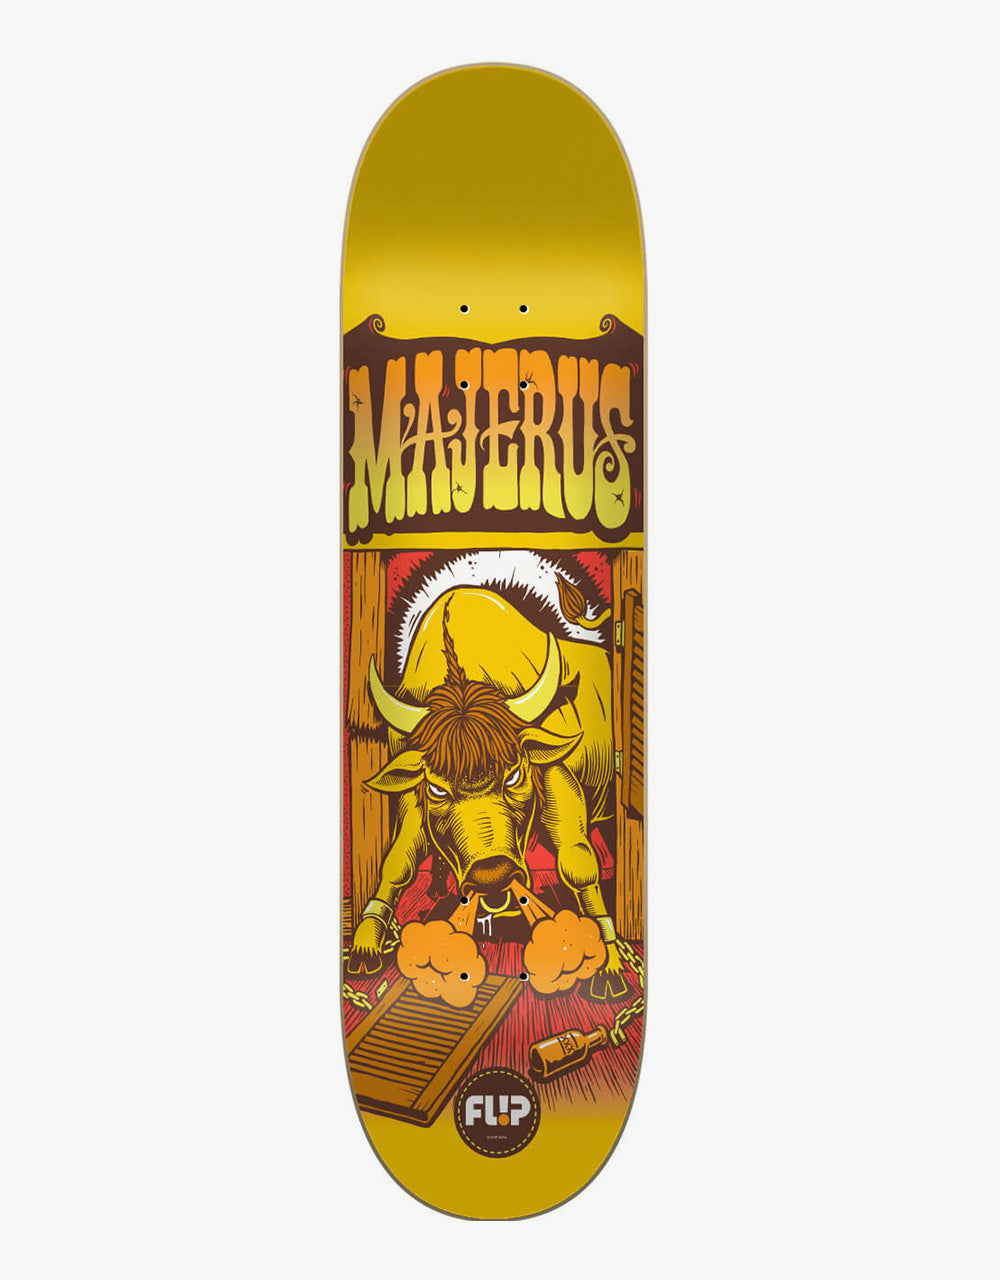 Flip Majerus Comix Skateboard Deck - 8.25"